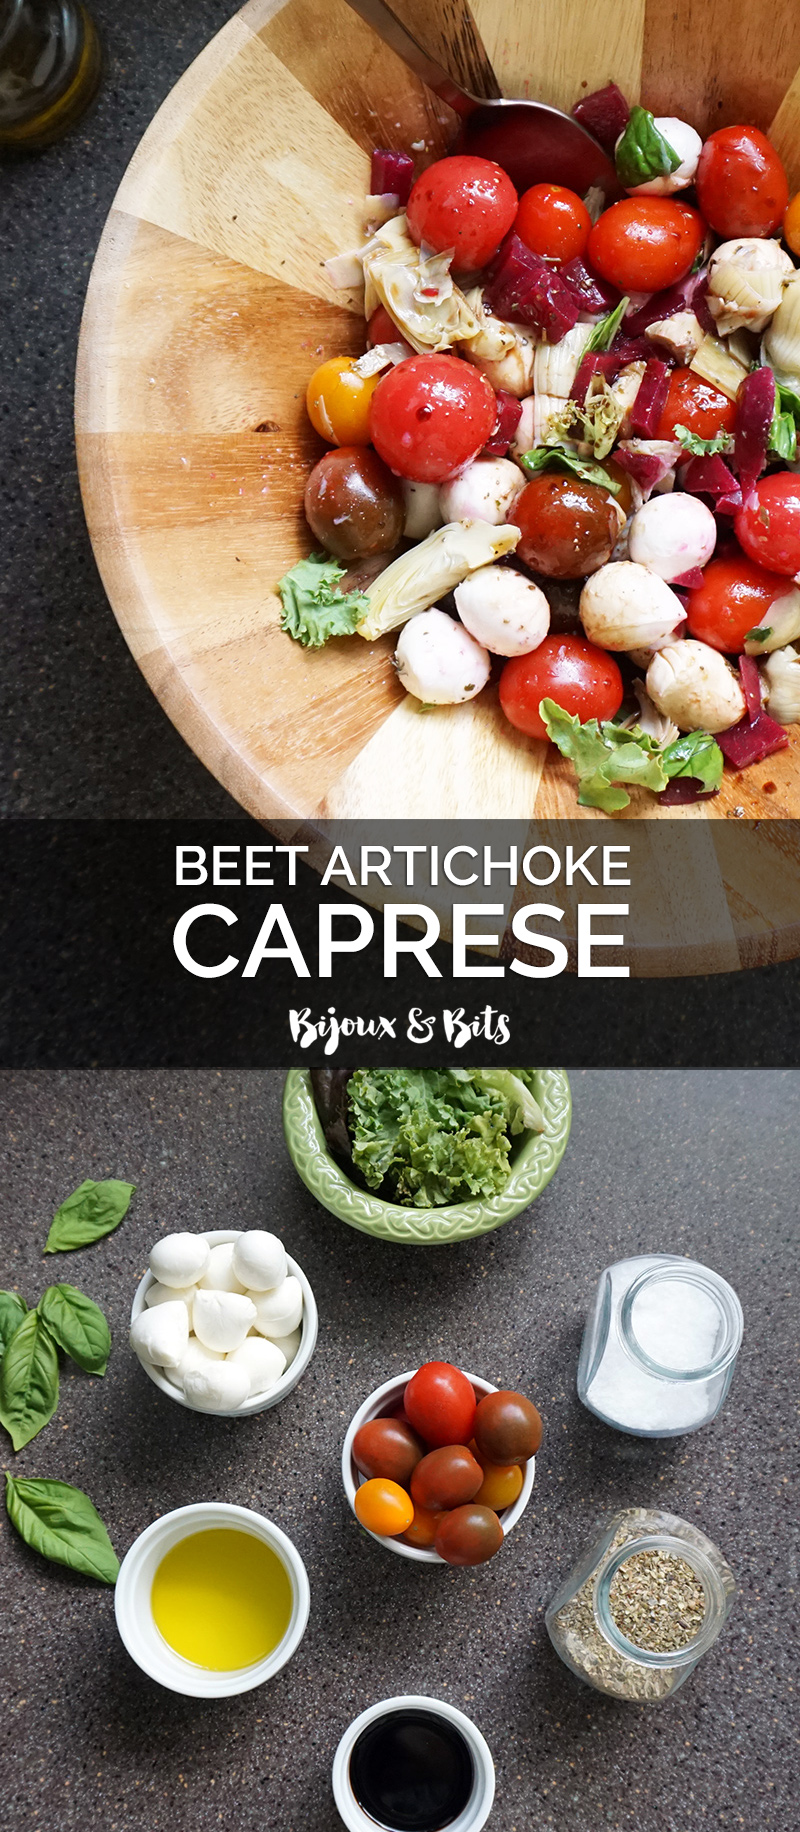 Beet artichoke caprese recipe on @bijouxandbits